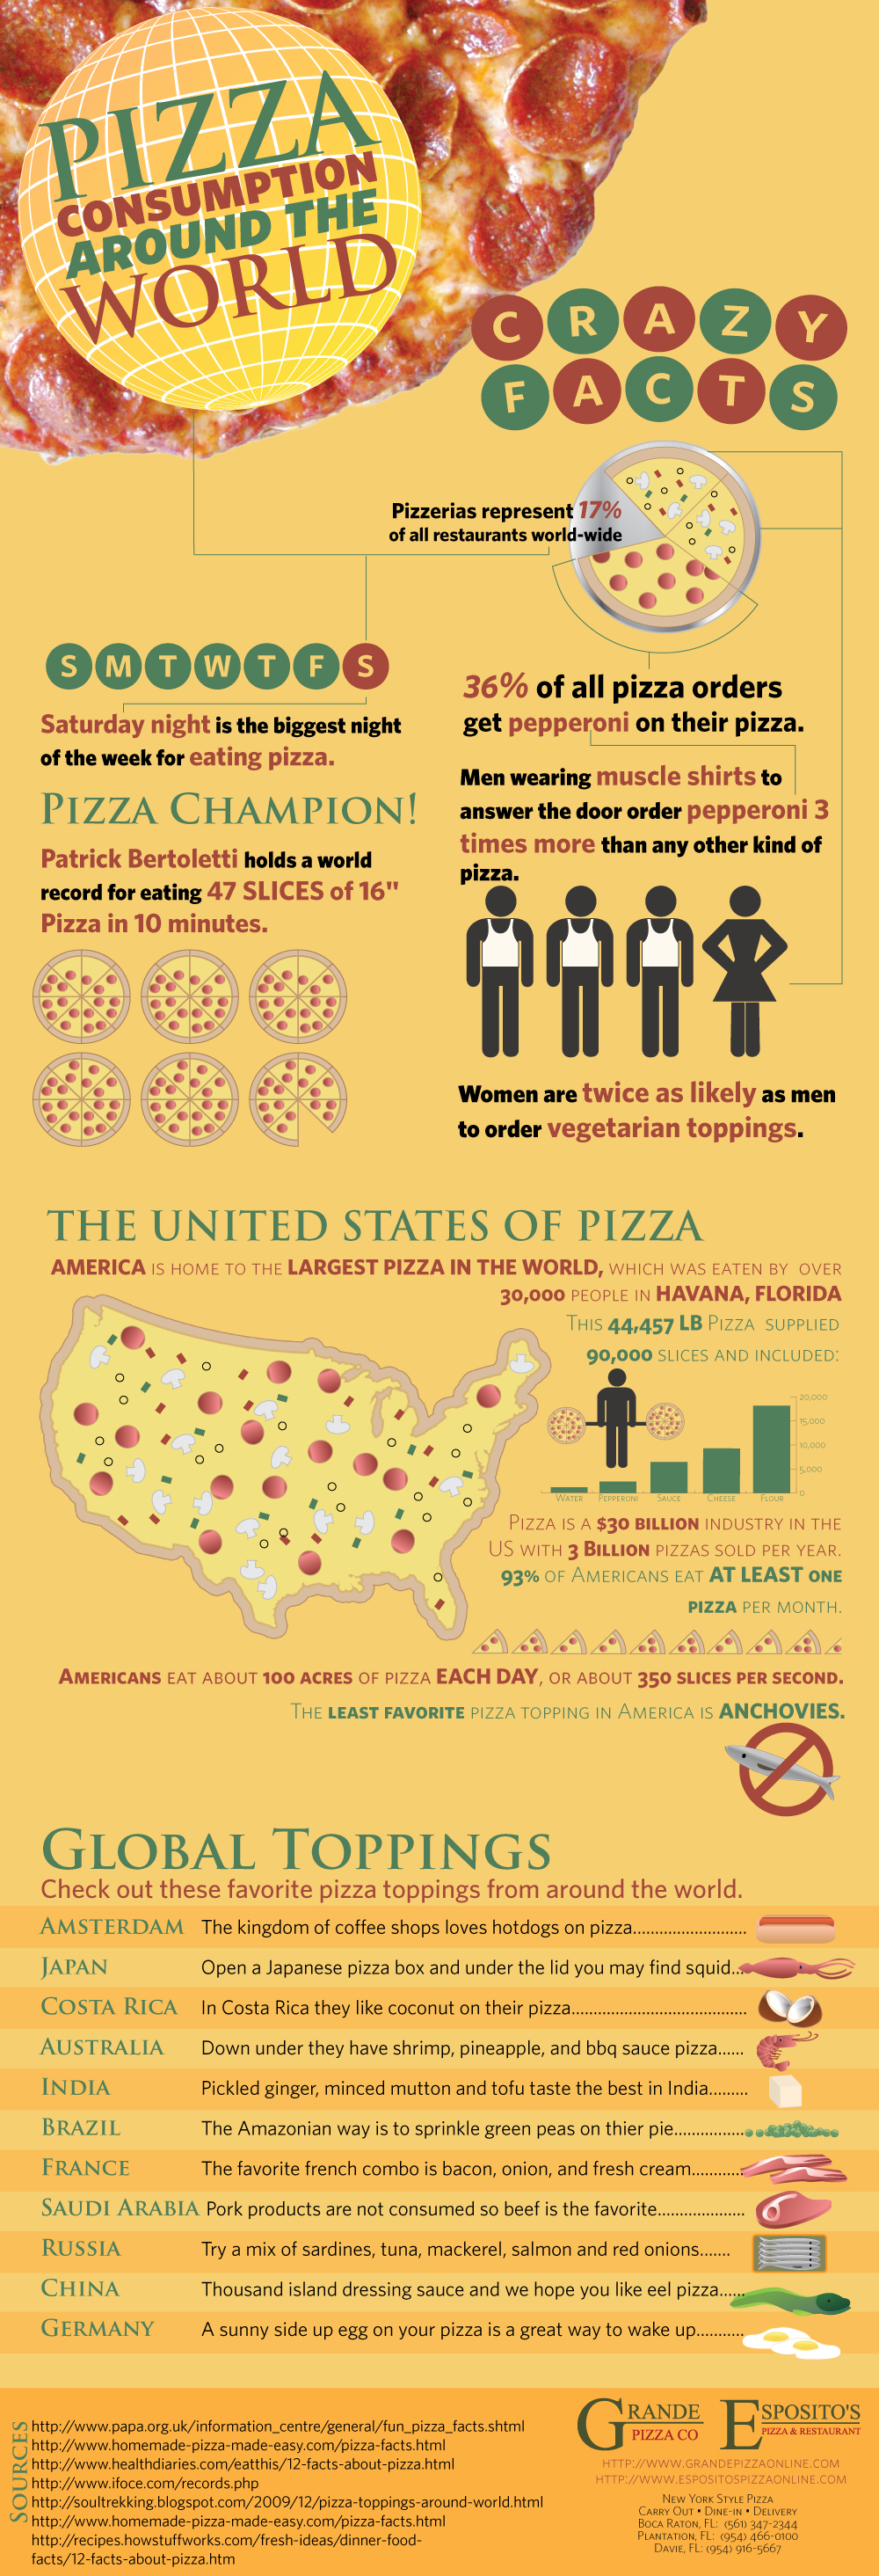 Pizza Consumption Around The World